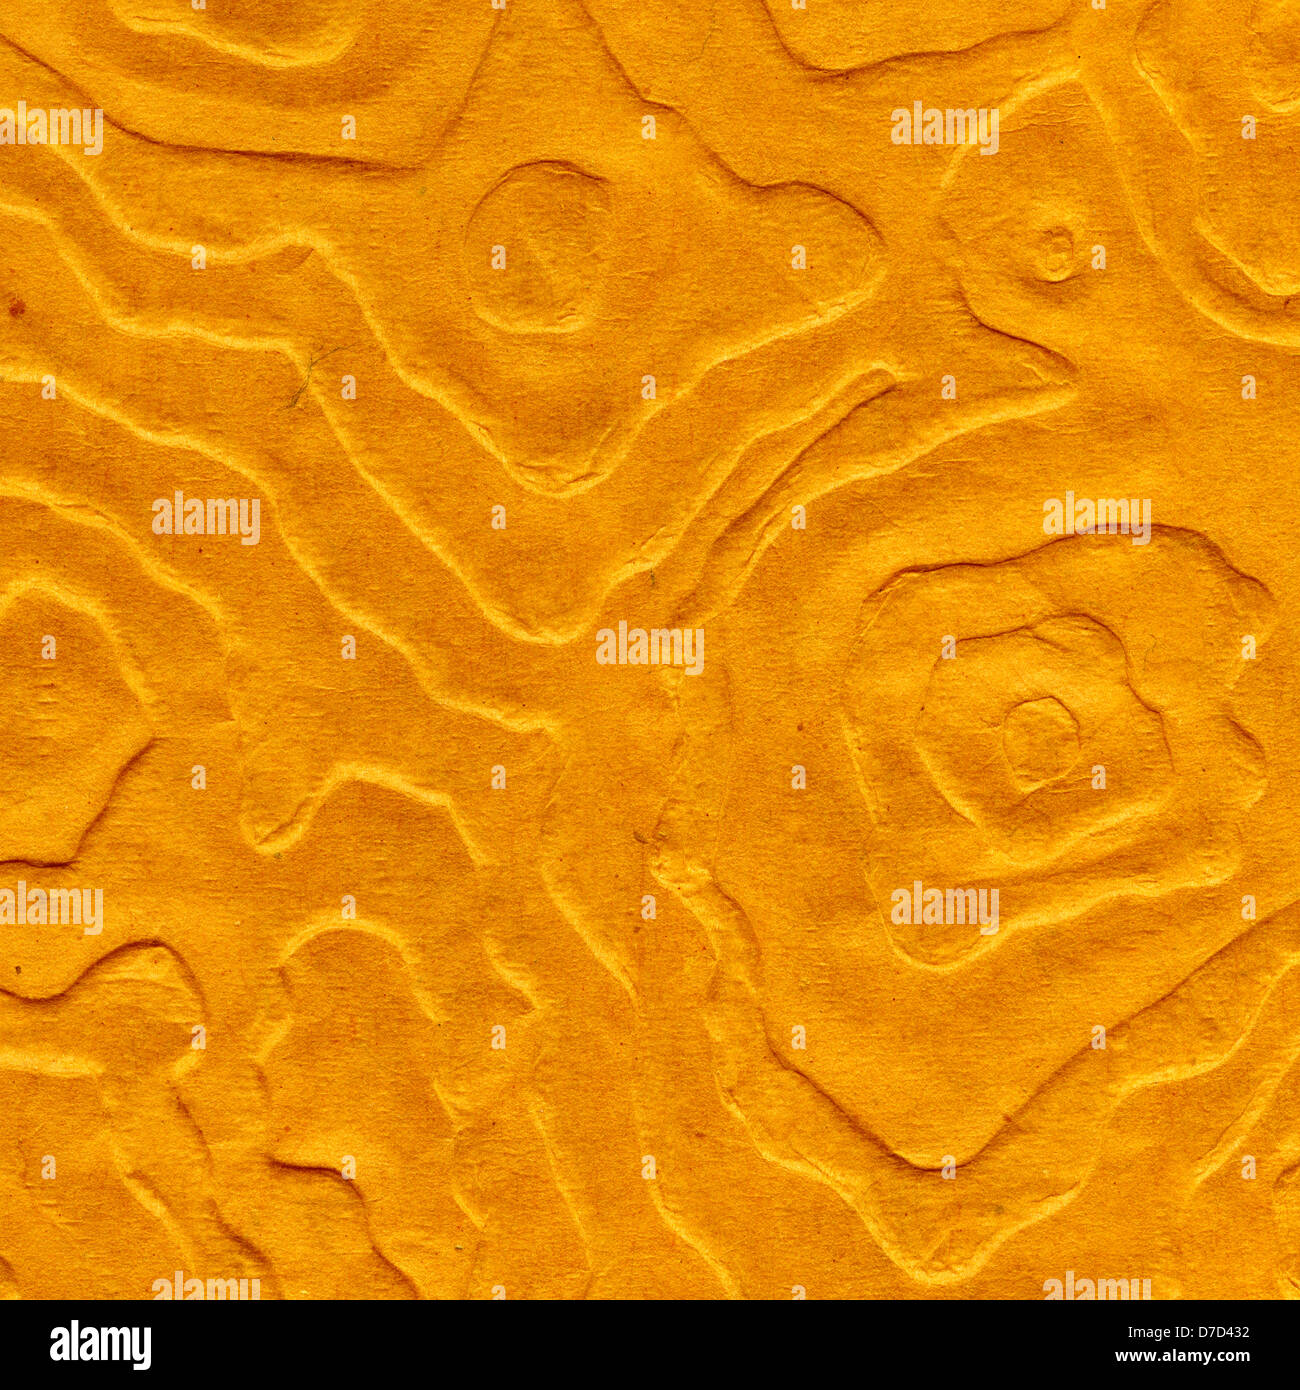 High resolution scan orange rice paper decorative pattern made amorphic mandalas. Scanned at 2400dpi using professional Epson Stock Photo